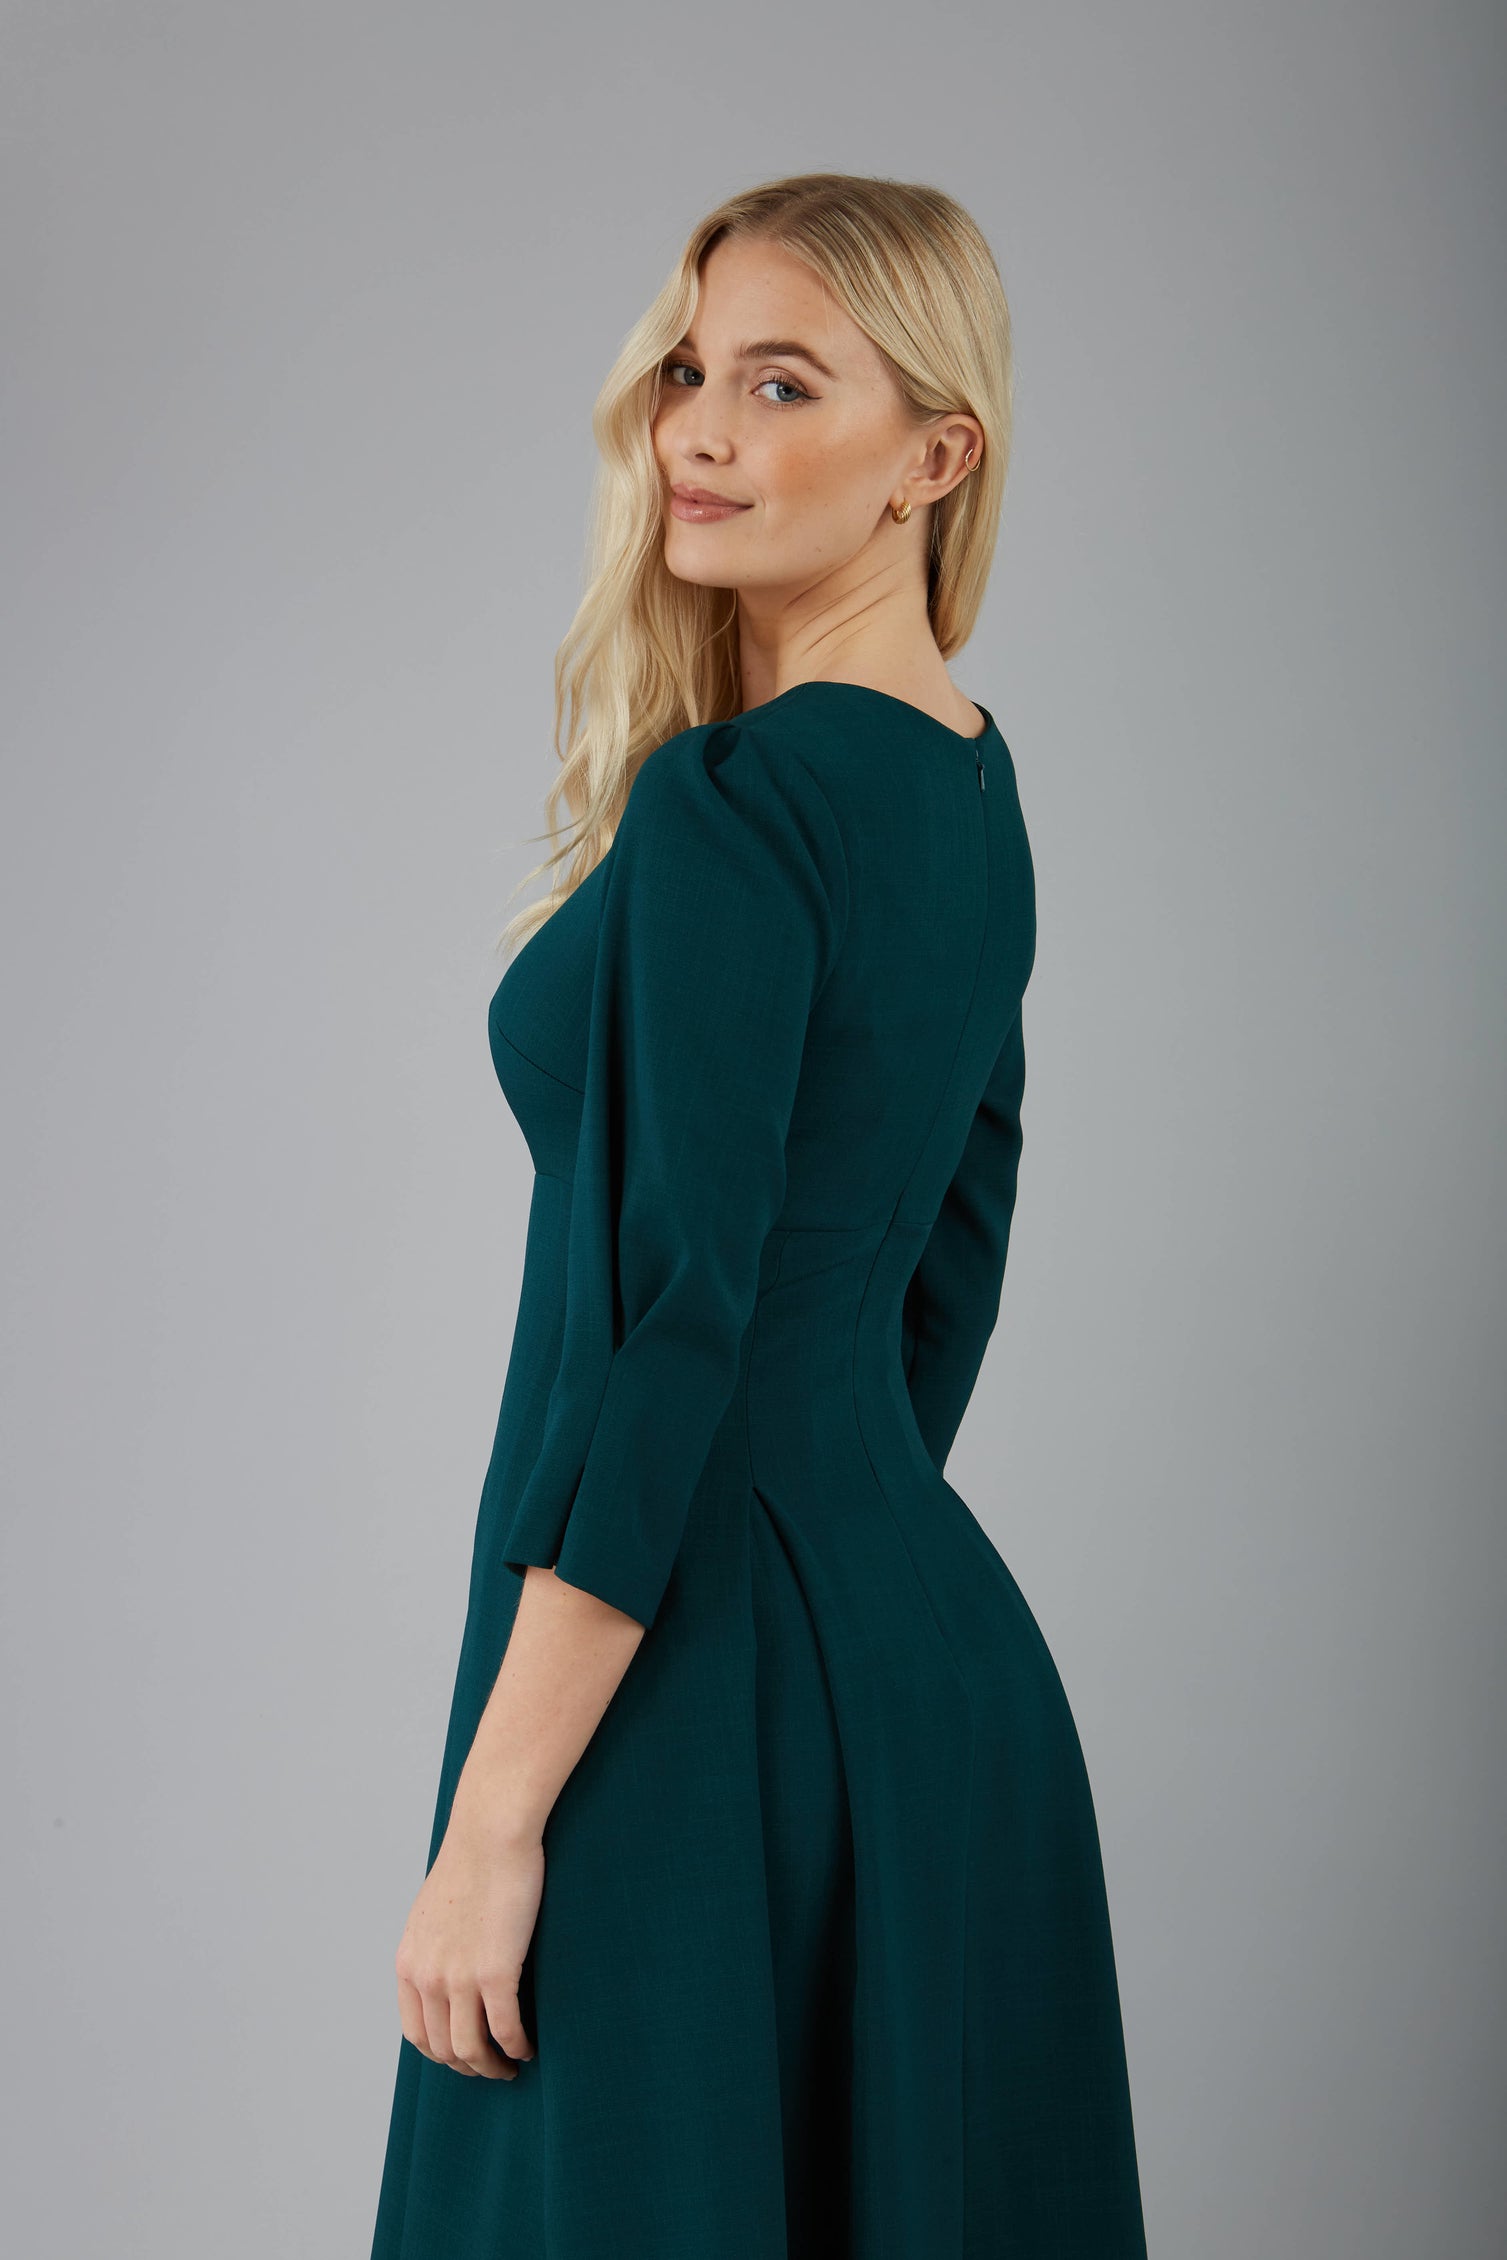 blonde model is wearing diva catwalk harpsden a-line skirt 3/4 sleeve swing dress with rounded neckline in forest green back